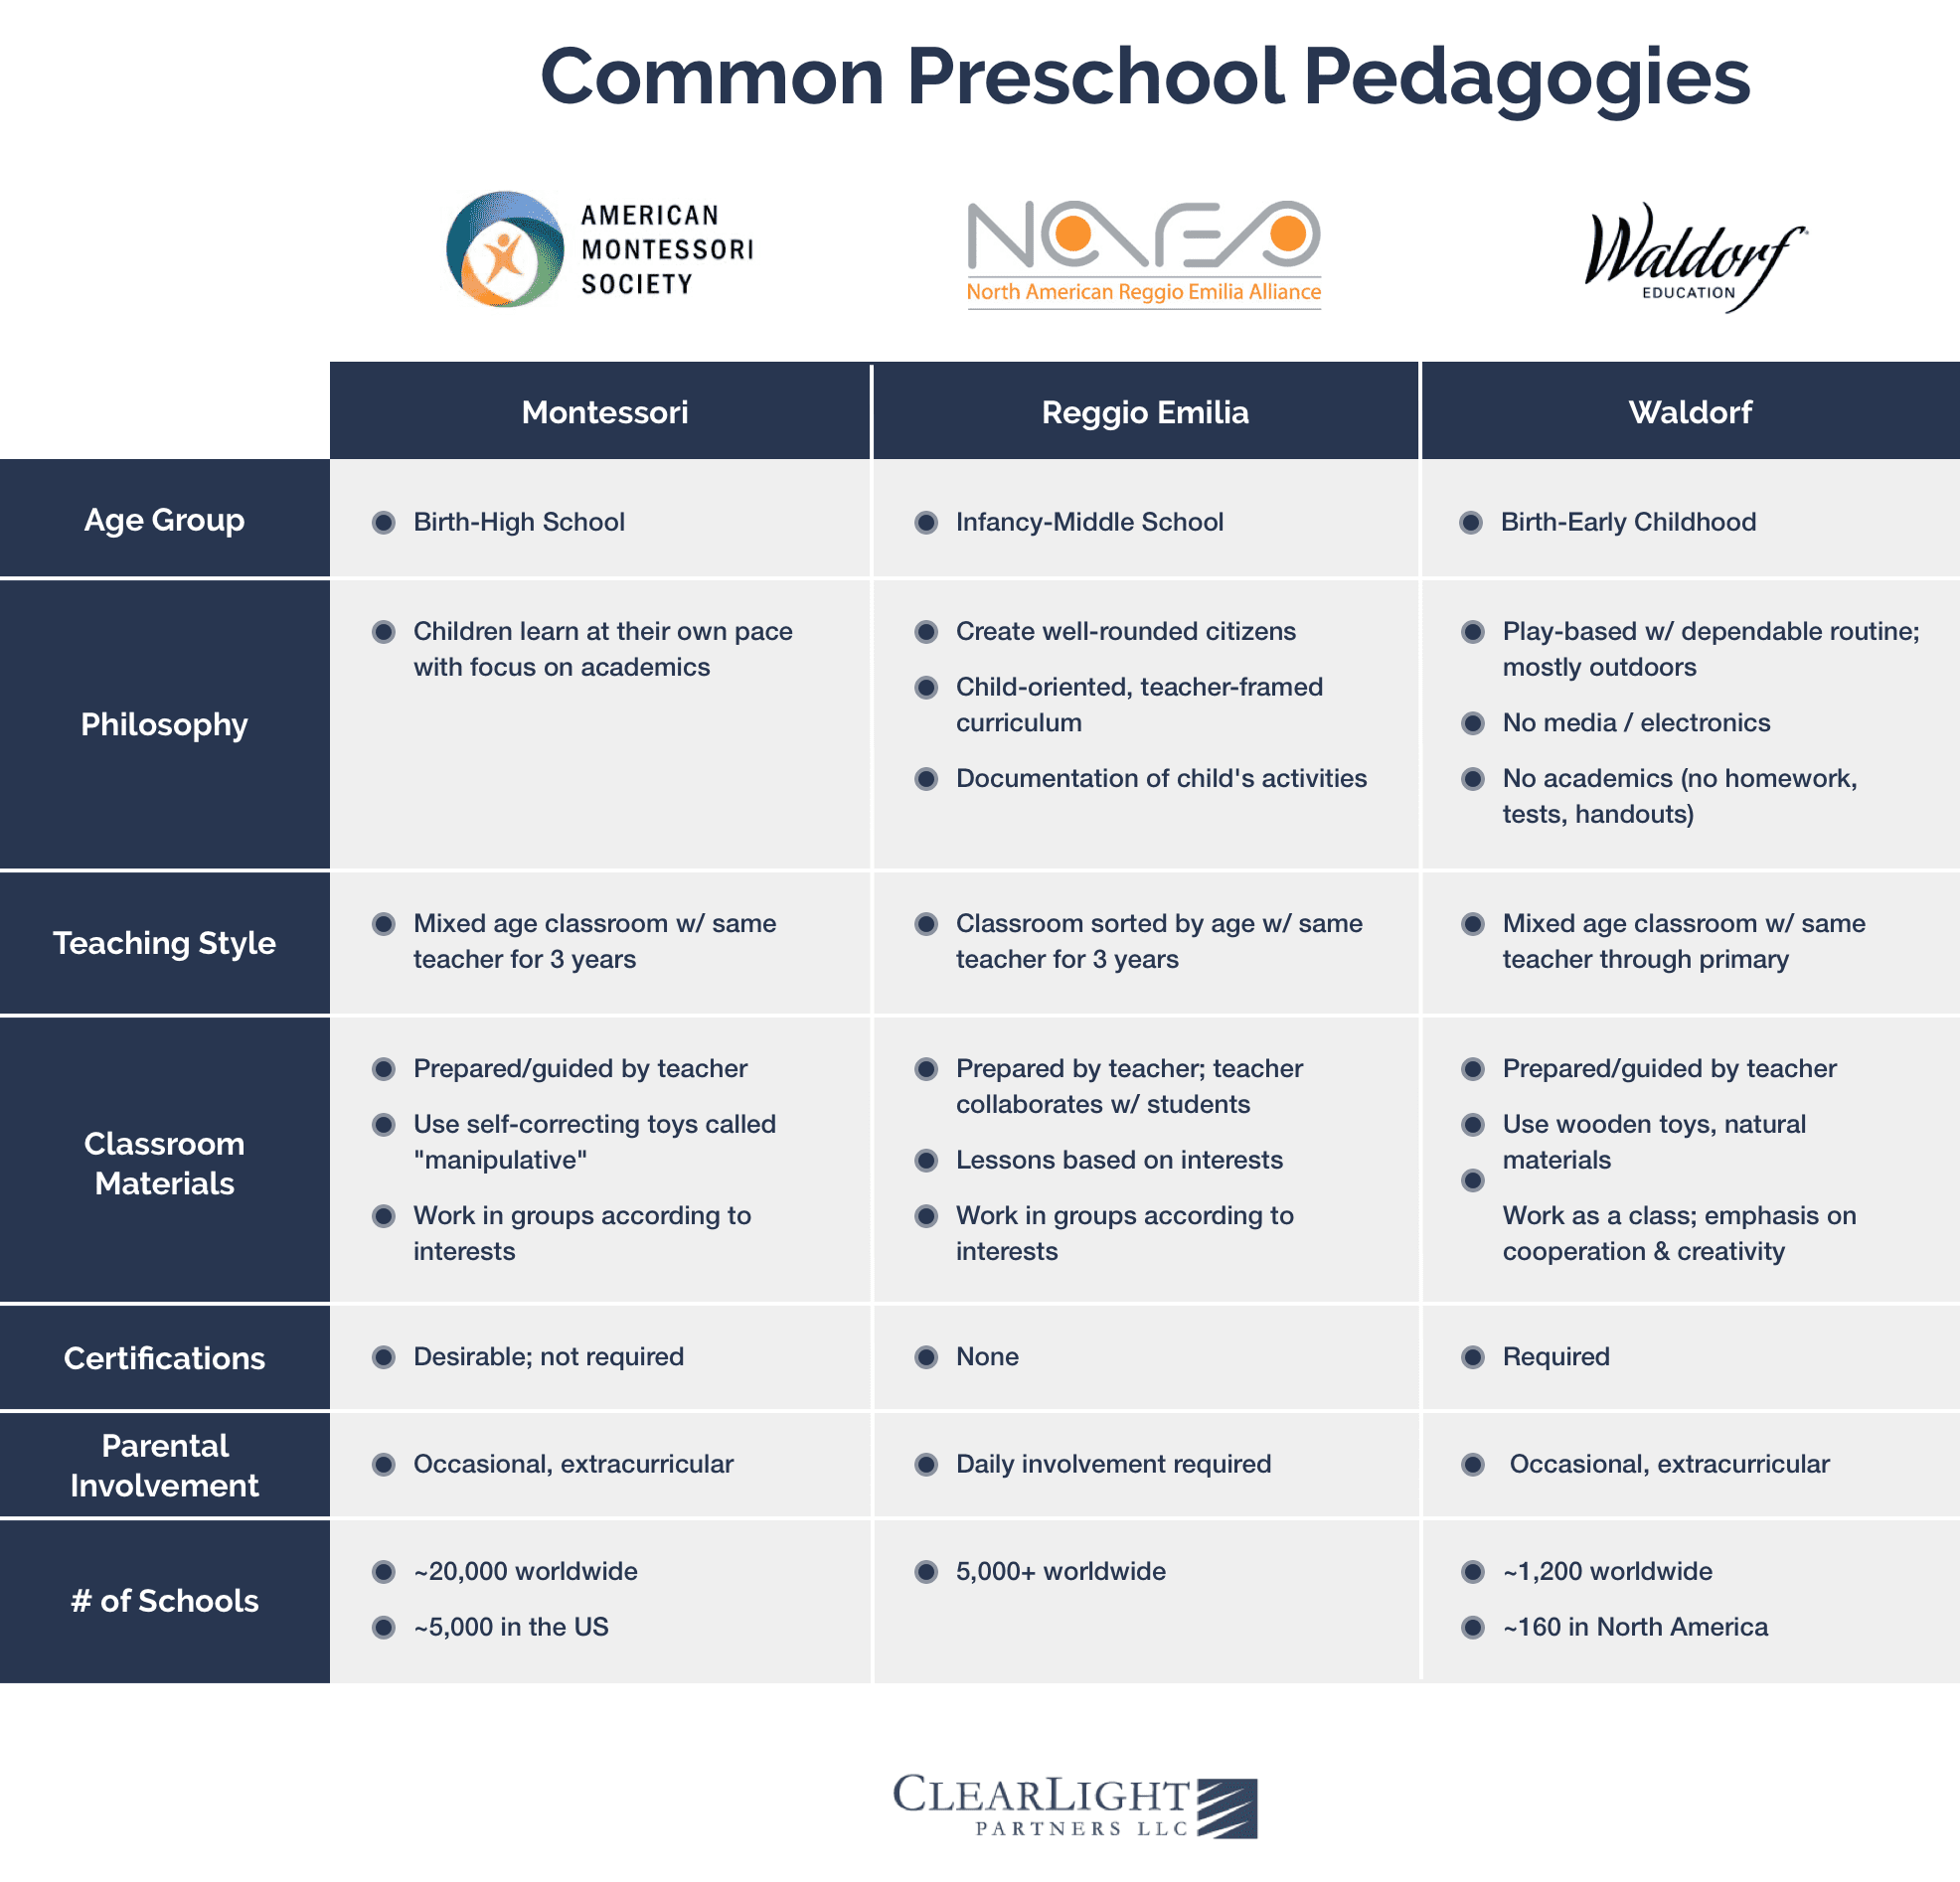 Common Preschool Pedagogies